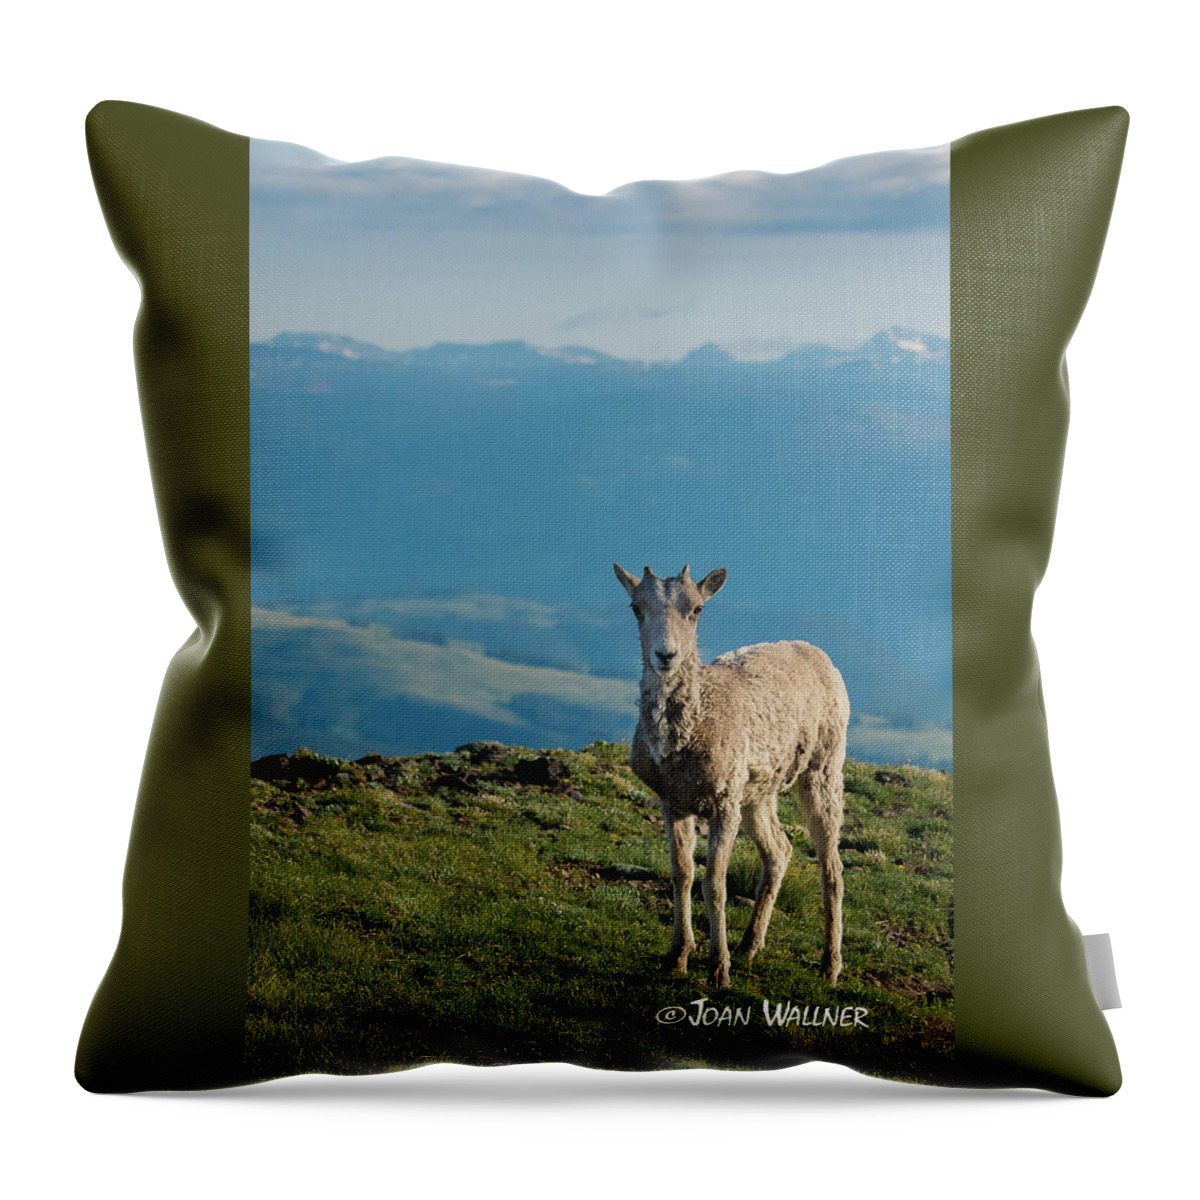 Big Horn Sheep Throw Pillow featuring the photograph Baby Big Horn Sheep by Joan Wallner